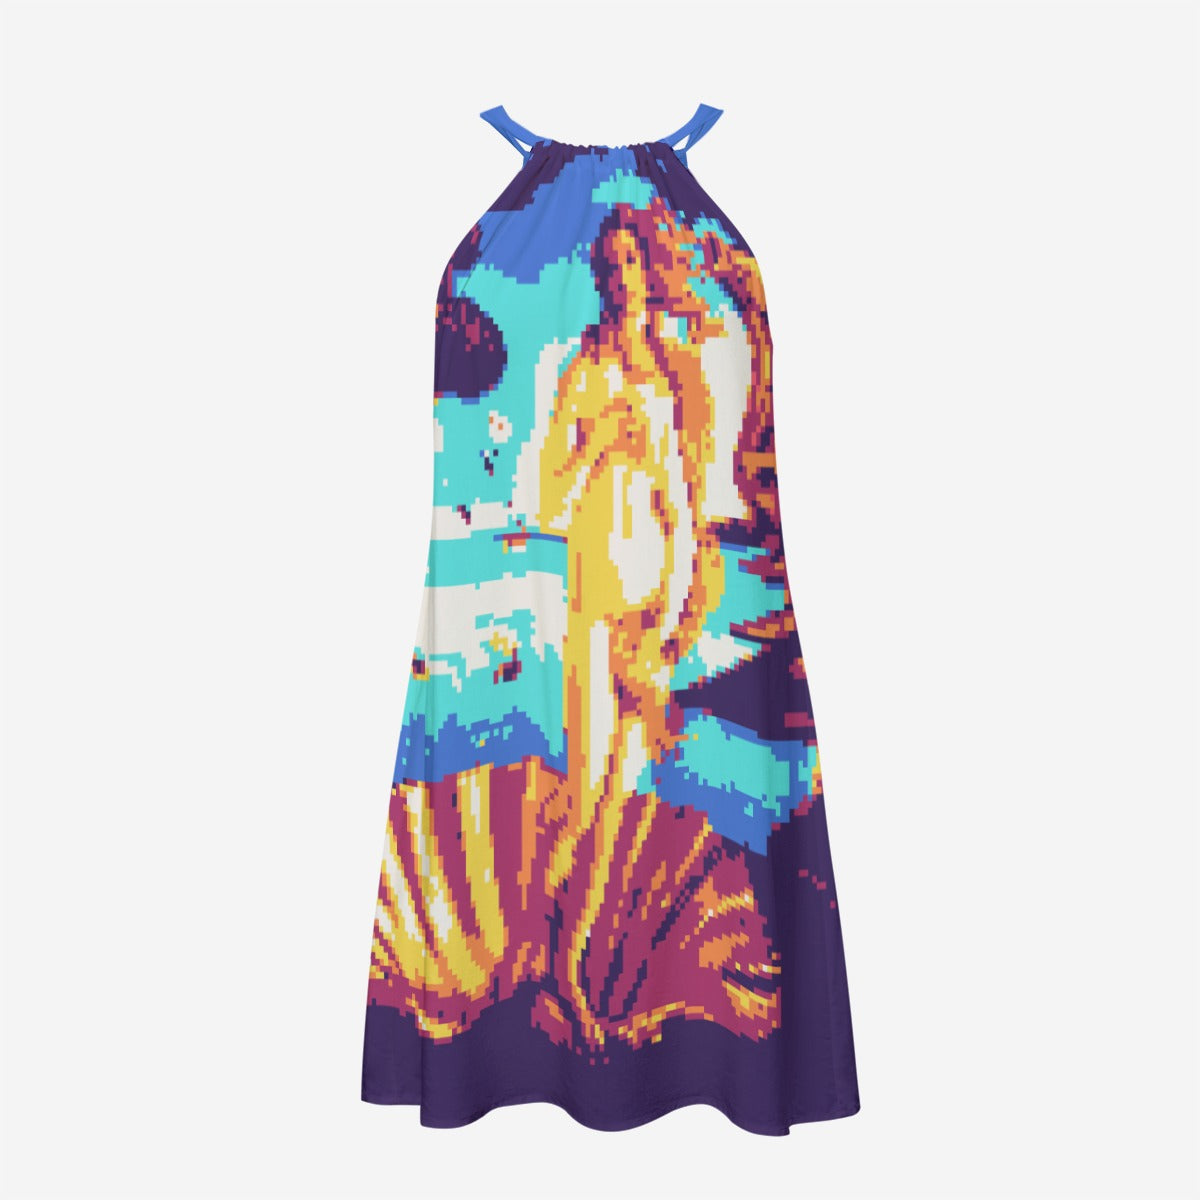 8Bit Aphrodite Greek Goddess Dress Fantasy Dress Birth of Venus Weirdcore Sundress Hacker Botticelli